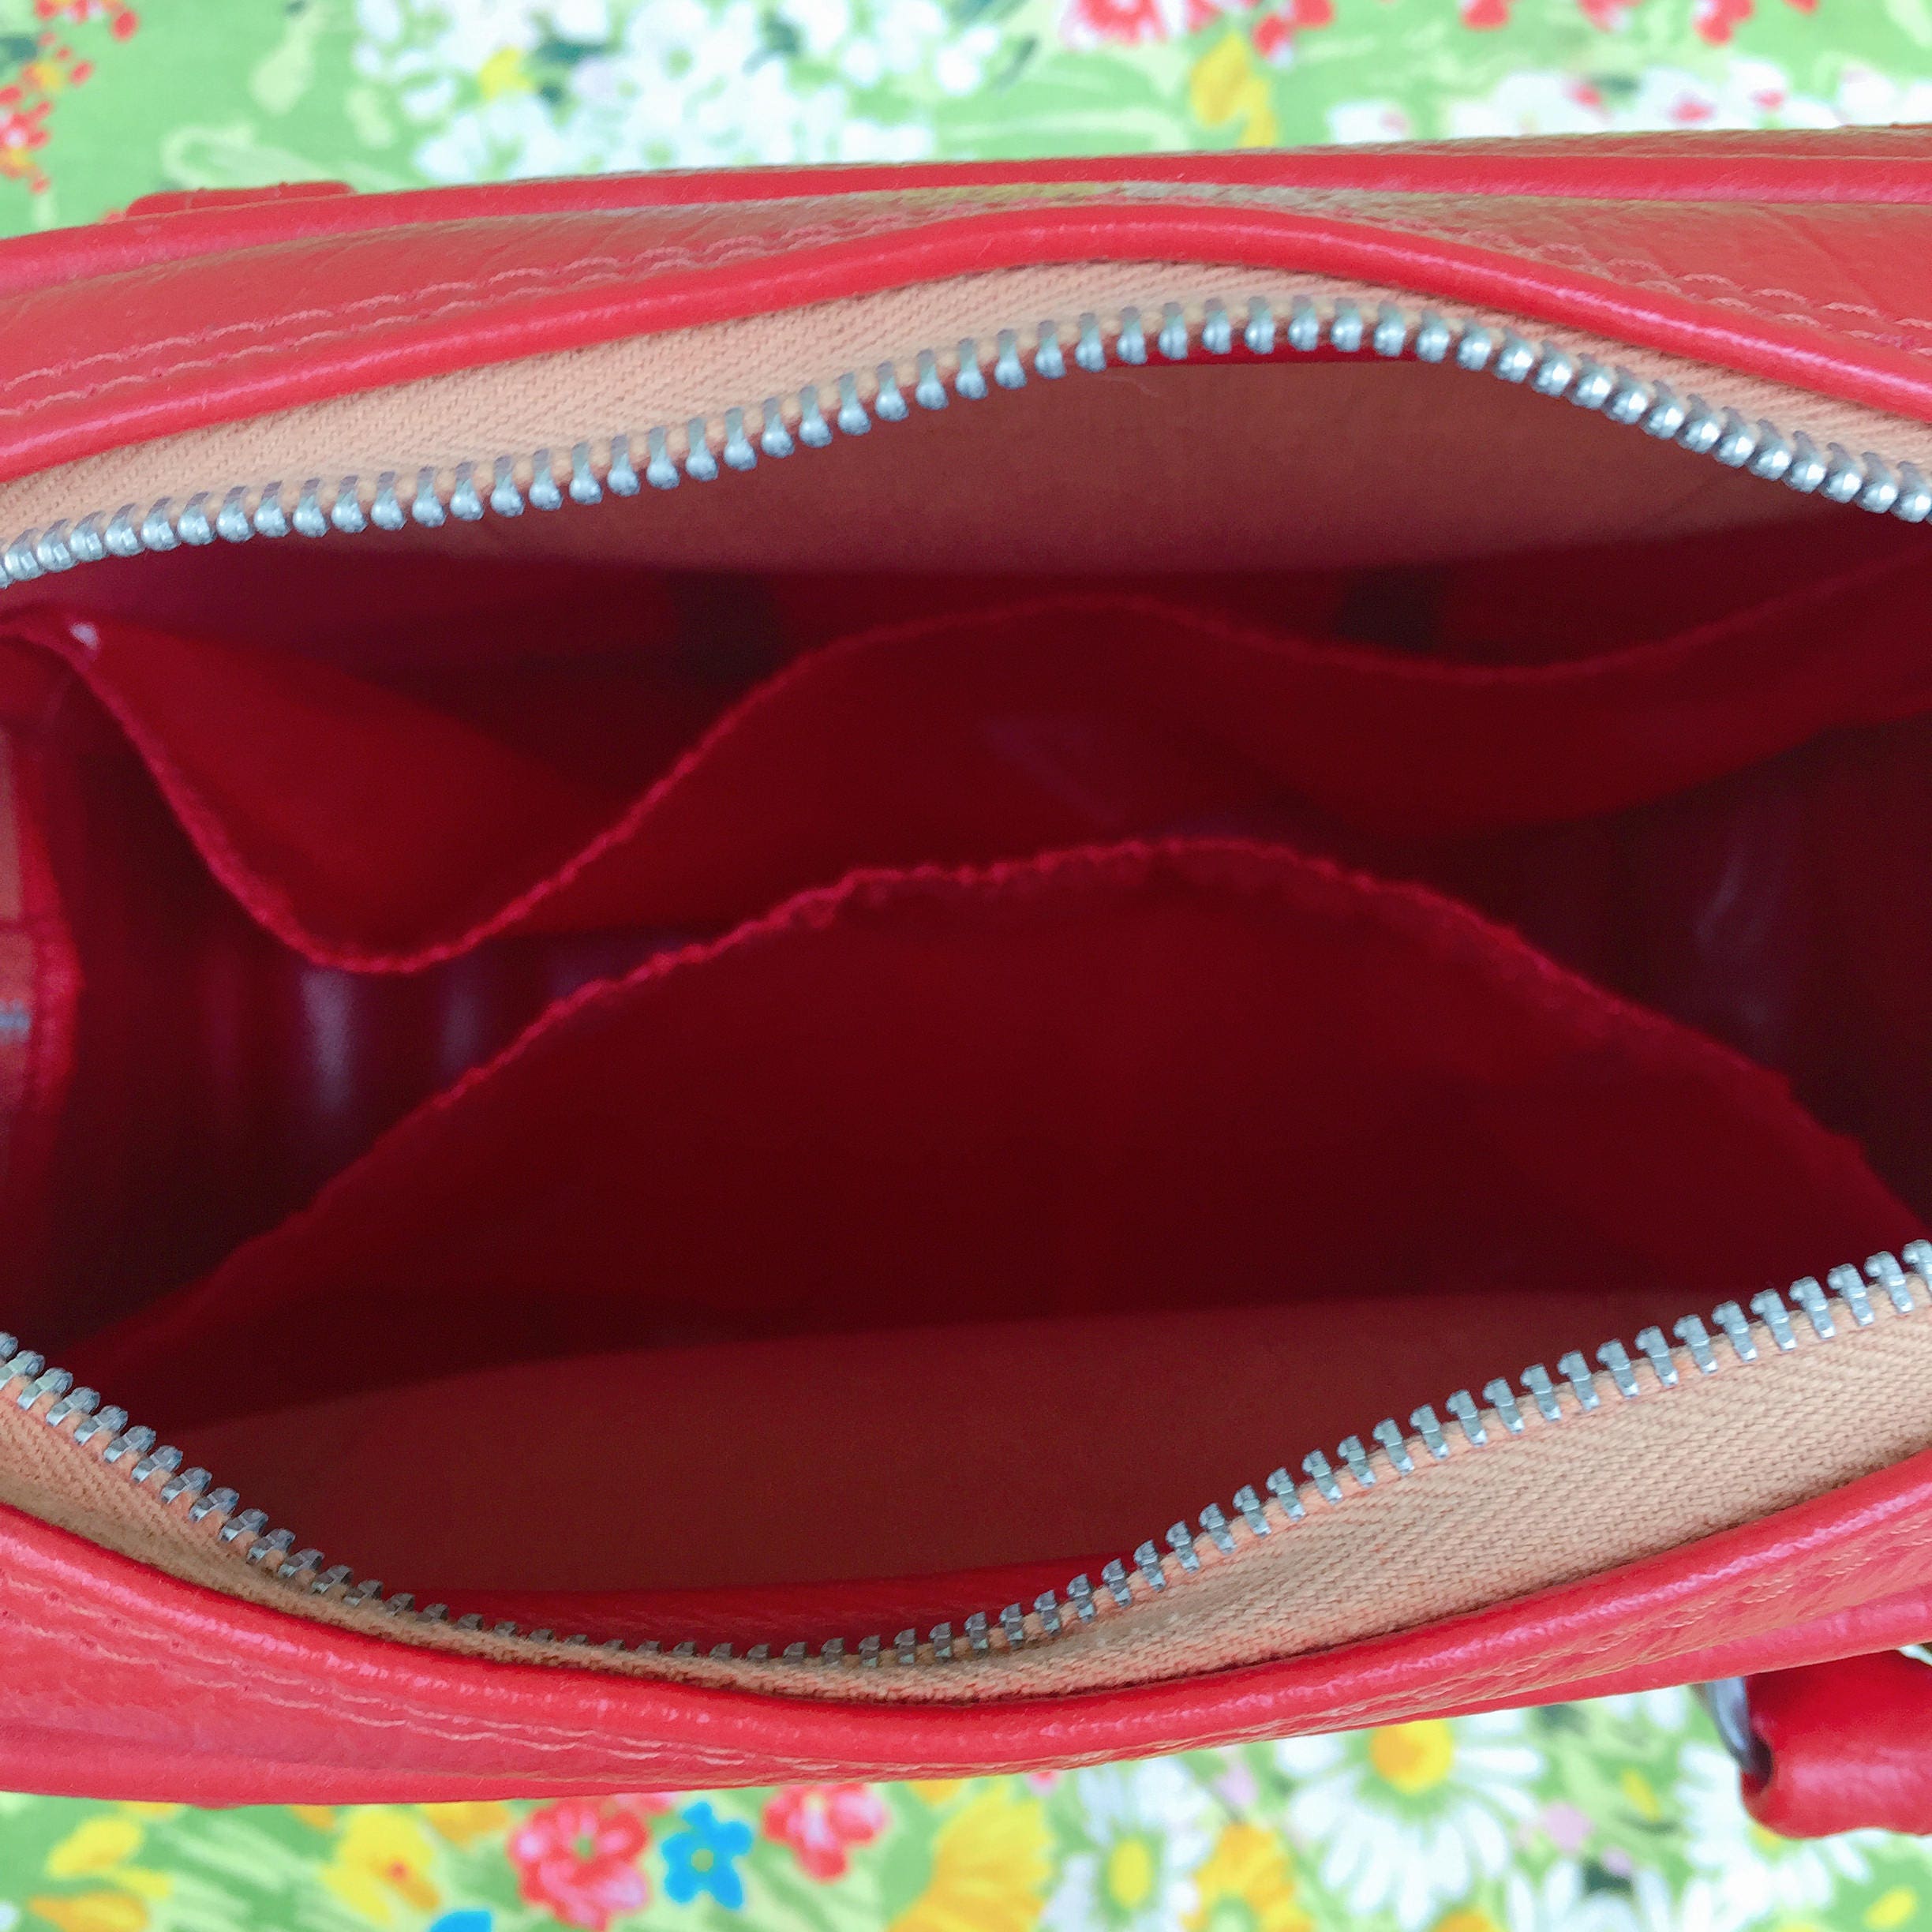 Vintage Red Bowling Bag, Amelia Earhart Bowling Bag, Vintage Travel Bag ...